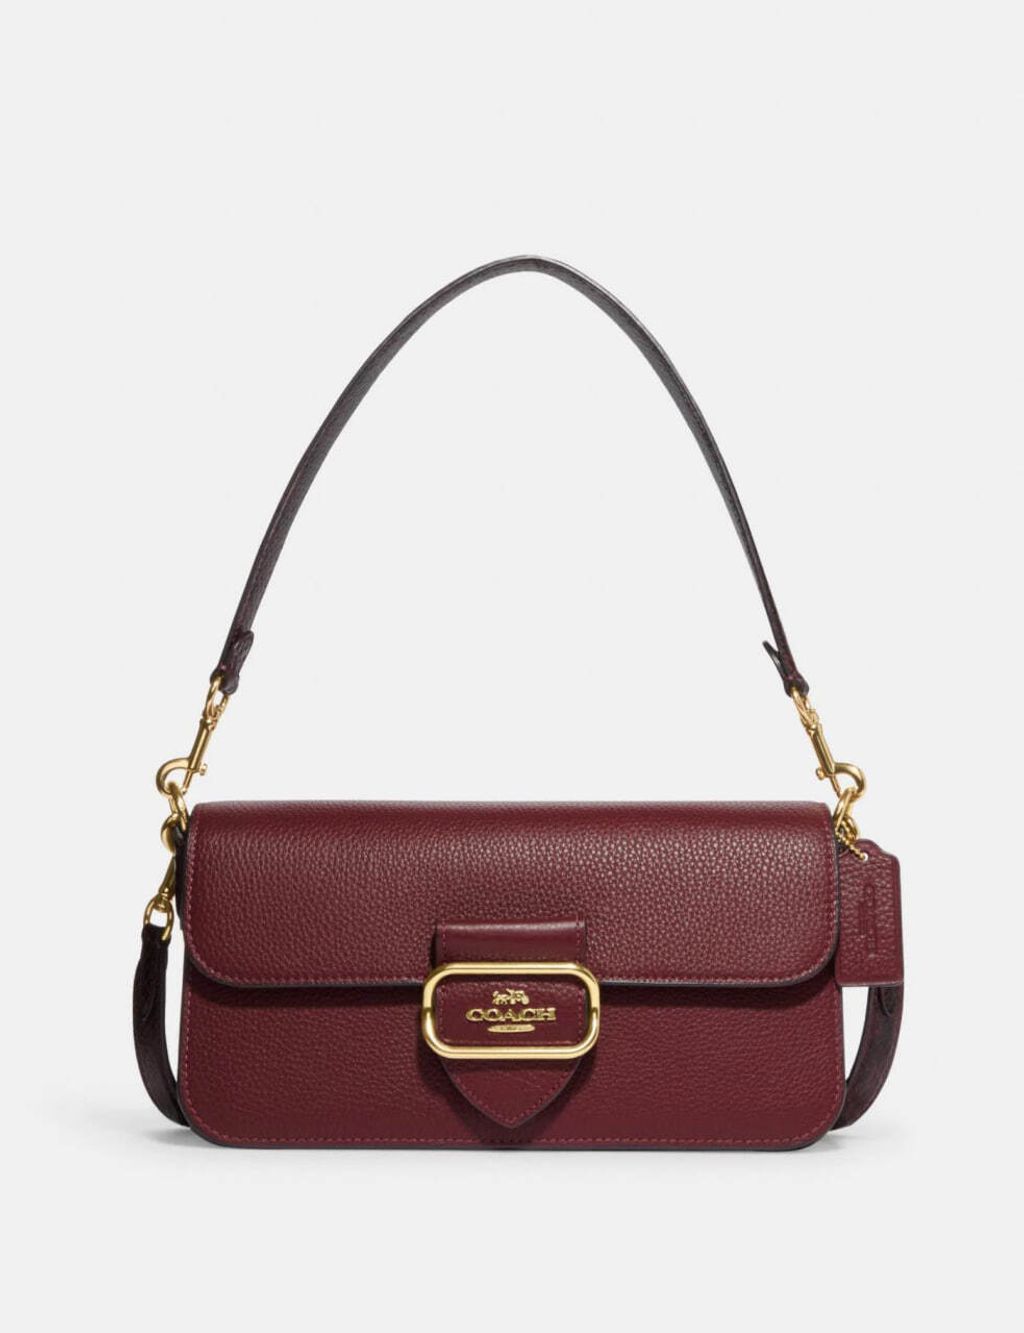 handbagbranded.com getlush outlet personalshopper usa malaysia ready stock Coach Morgan Shoulder Bag